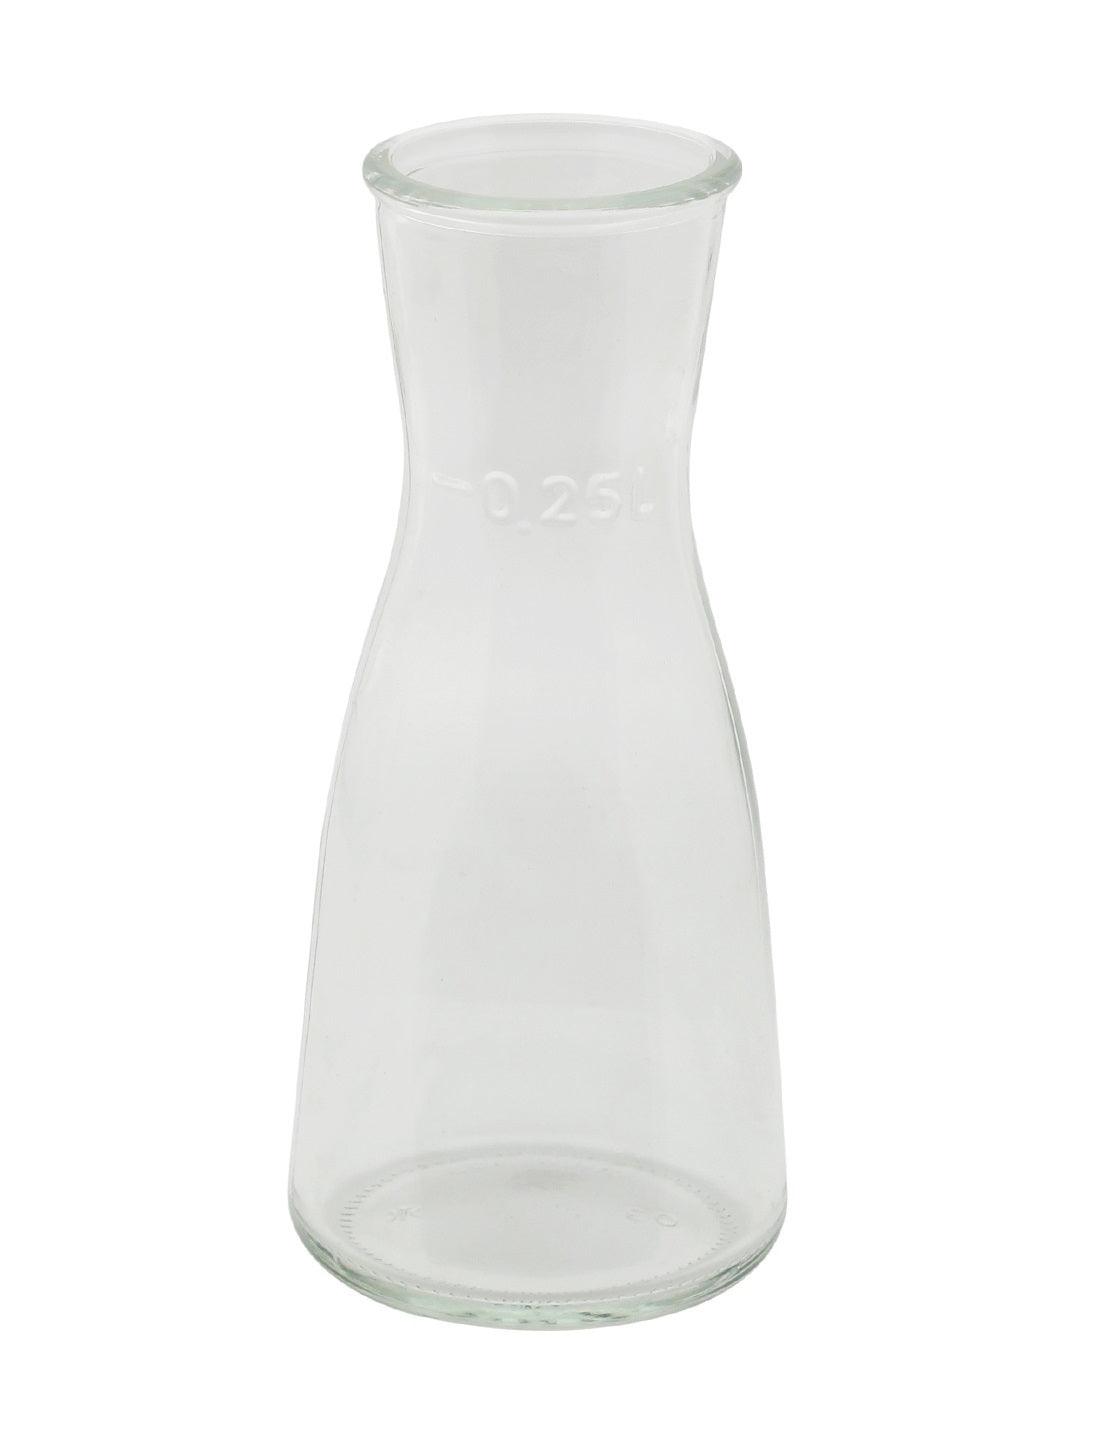 Uniglass Ossa Pitcher/Carafe/Water/Milk/Juice/Cocktail/Wine/Whiskey Decanter Glass Set, 250 ml, Set of 2, Transparent | Decanter